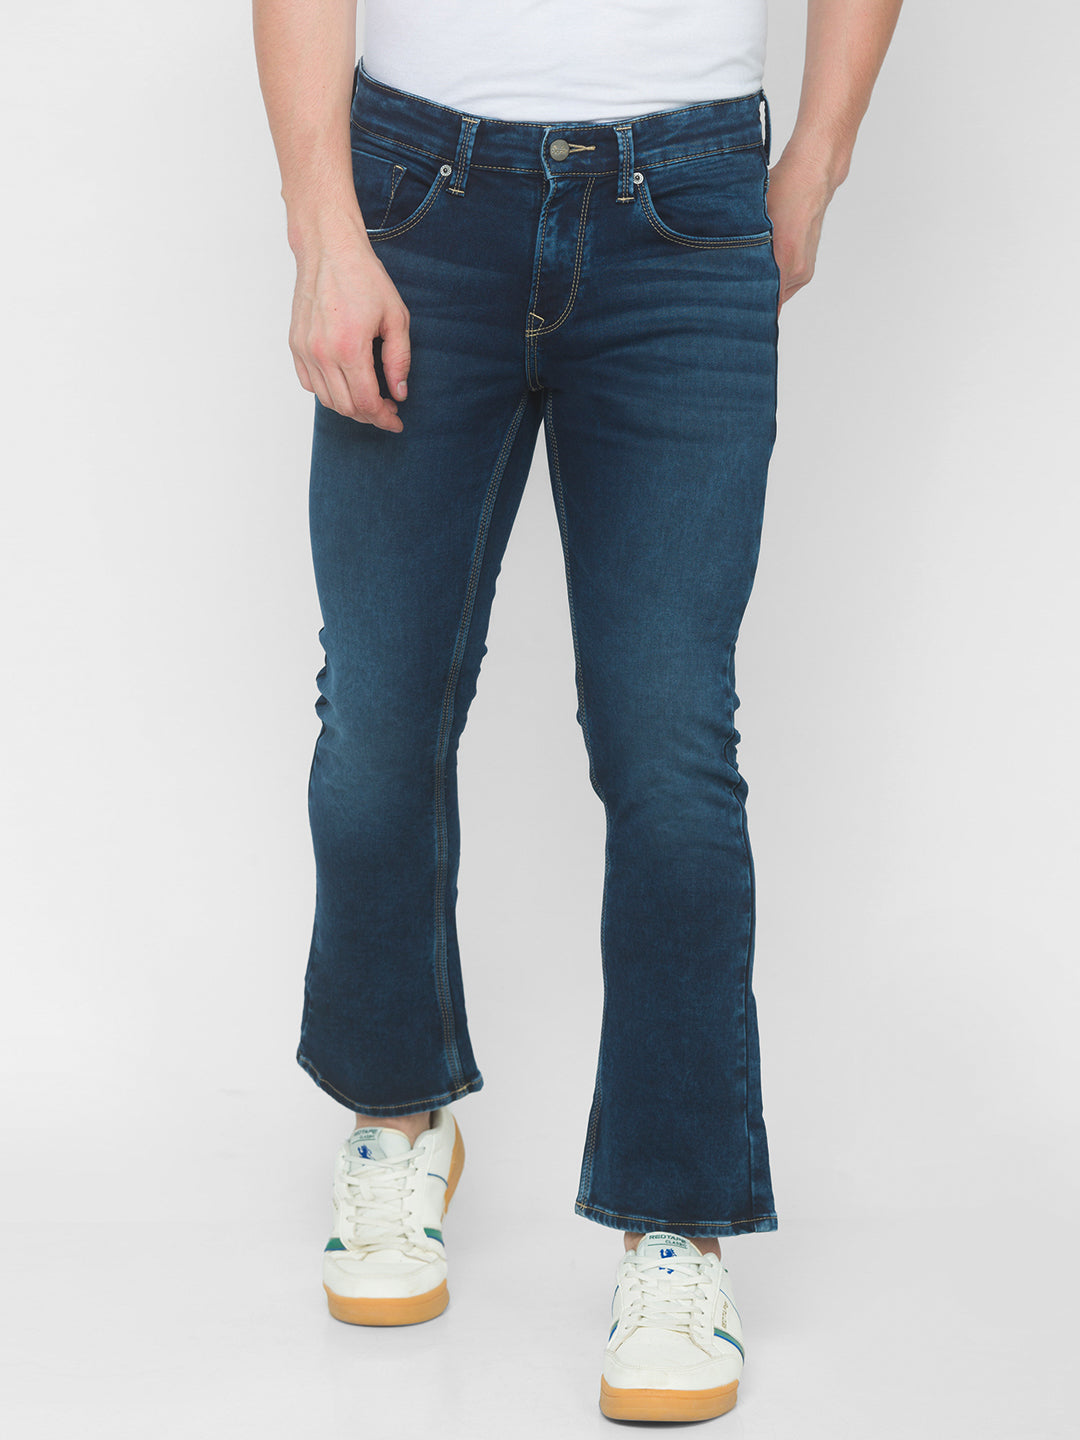 Men Ripped Knee Hole Denim Wide-Leg Pants Loose Bootcut Jeans Casual  Trousers | eBay